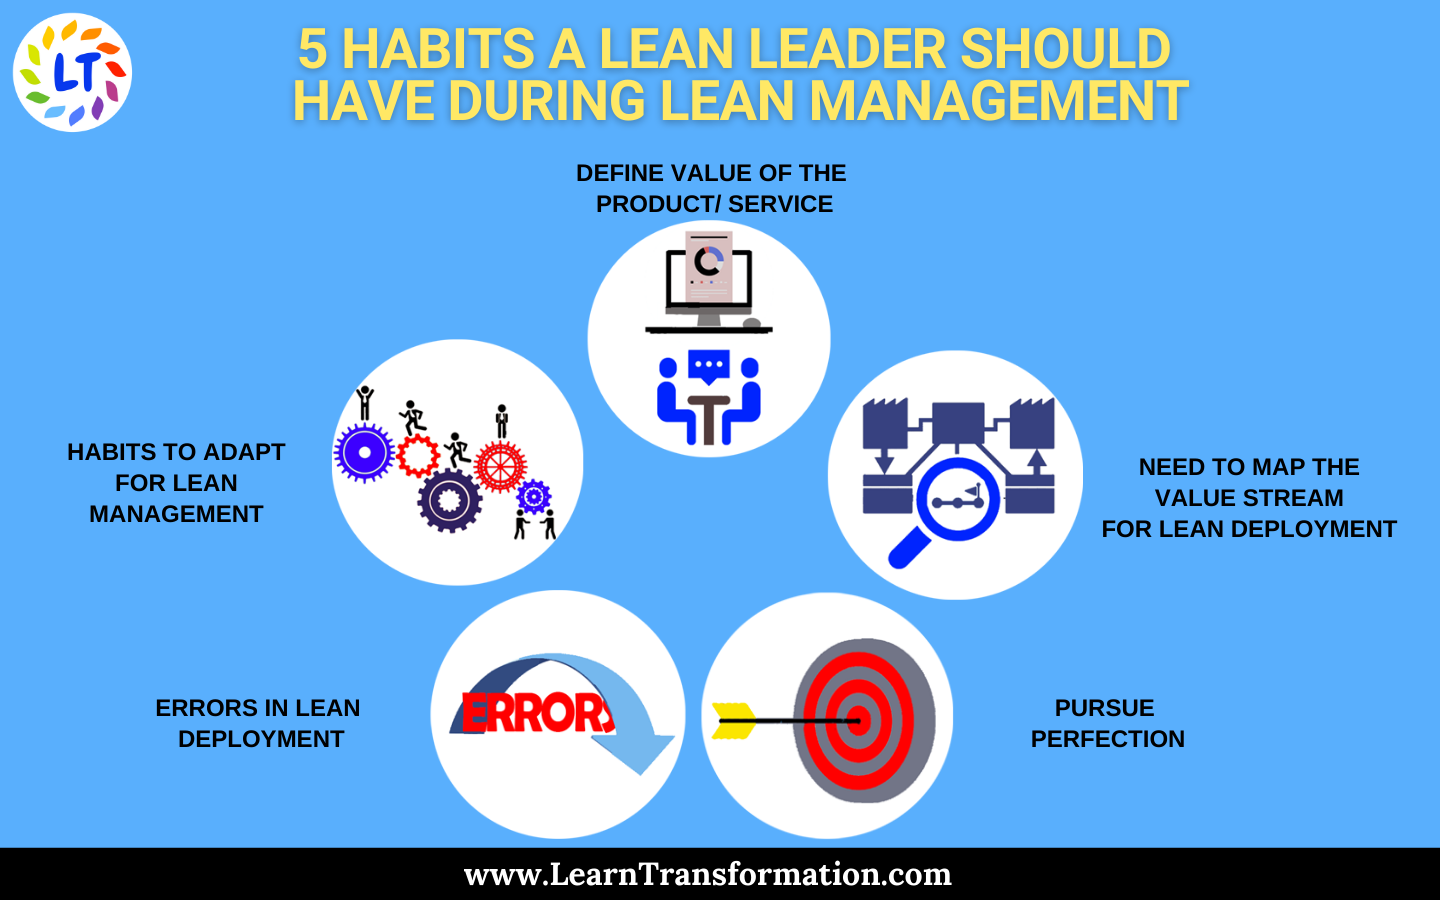 5 Habits a Lean Leader should have during Lean Management